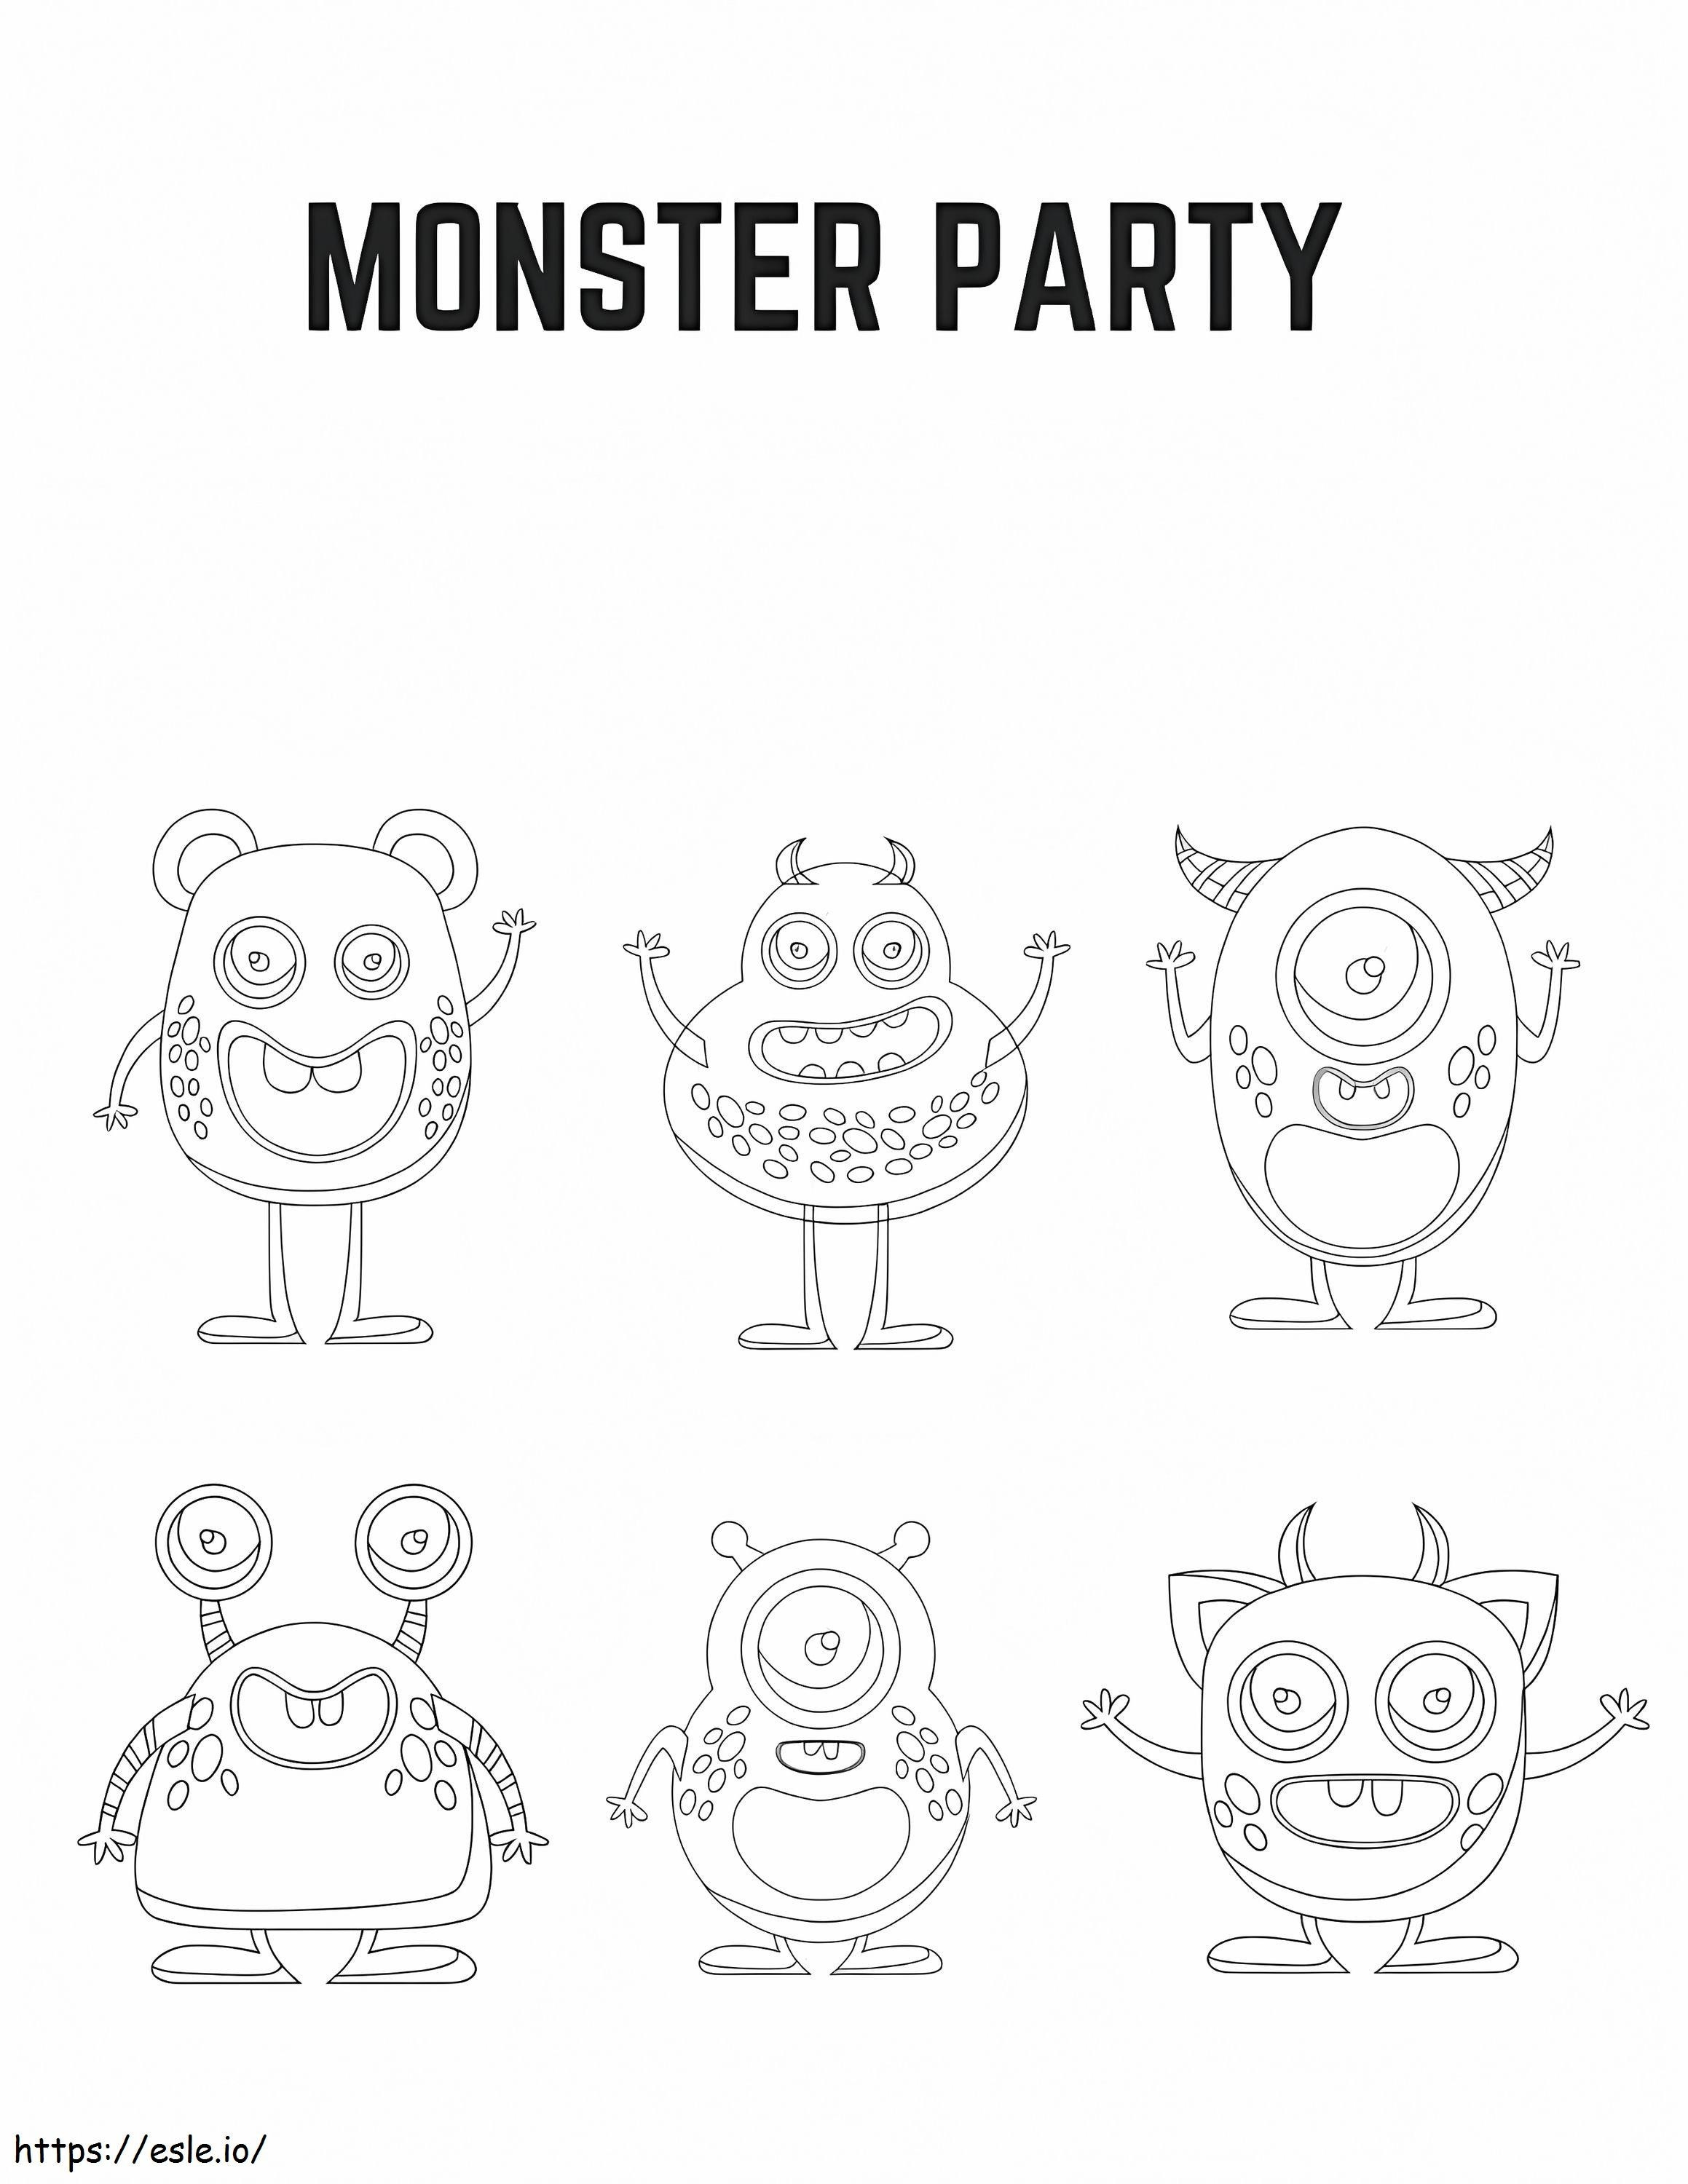 Pesta Enam Monster Gambar Mewarnai